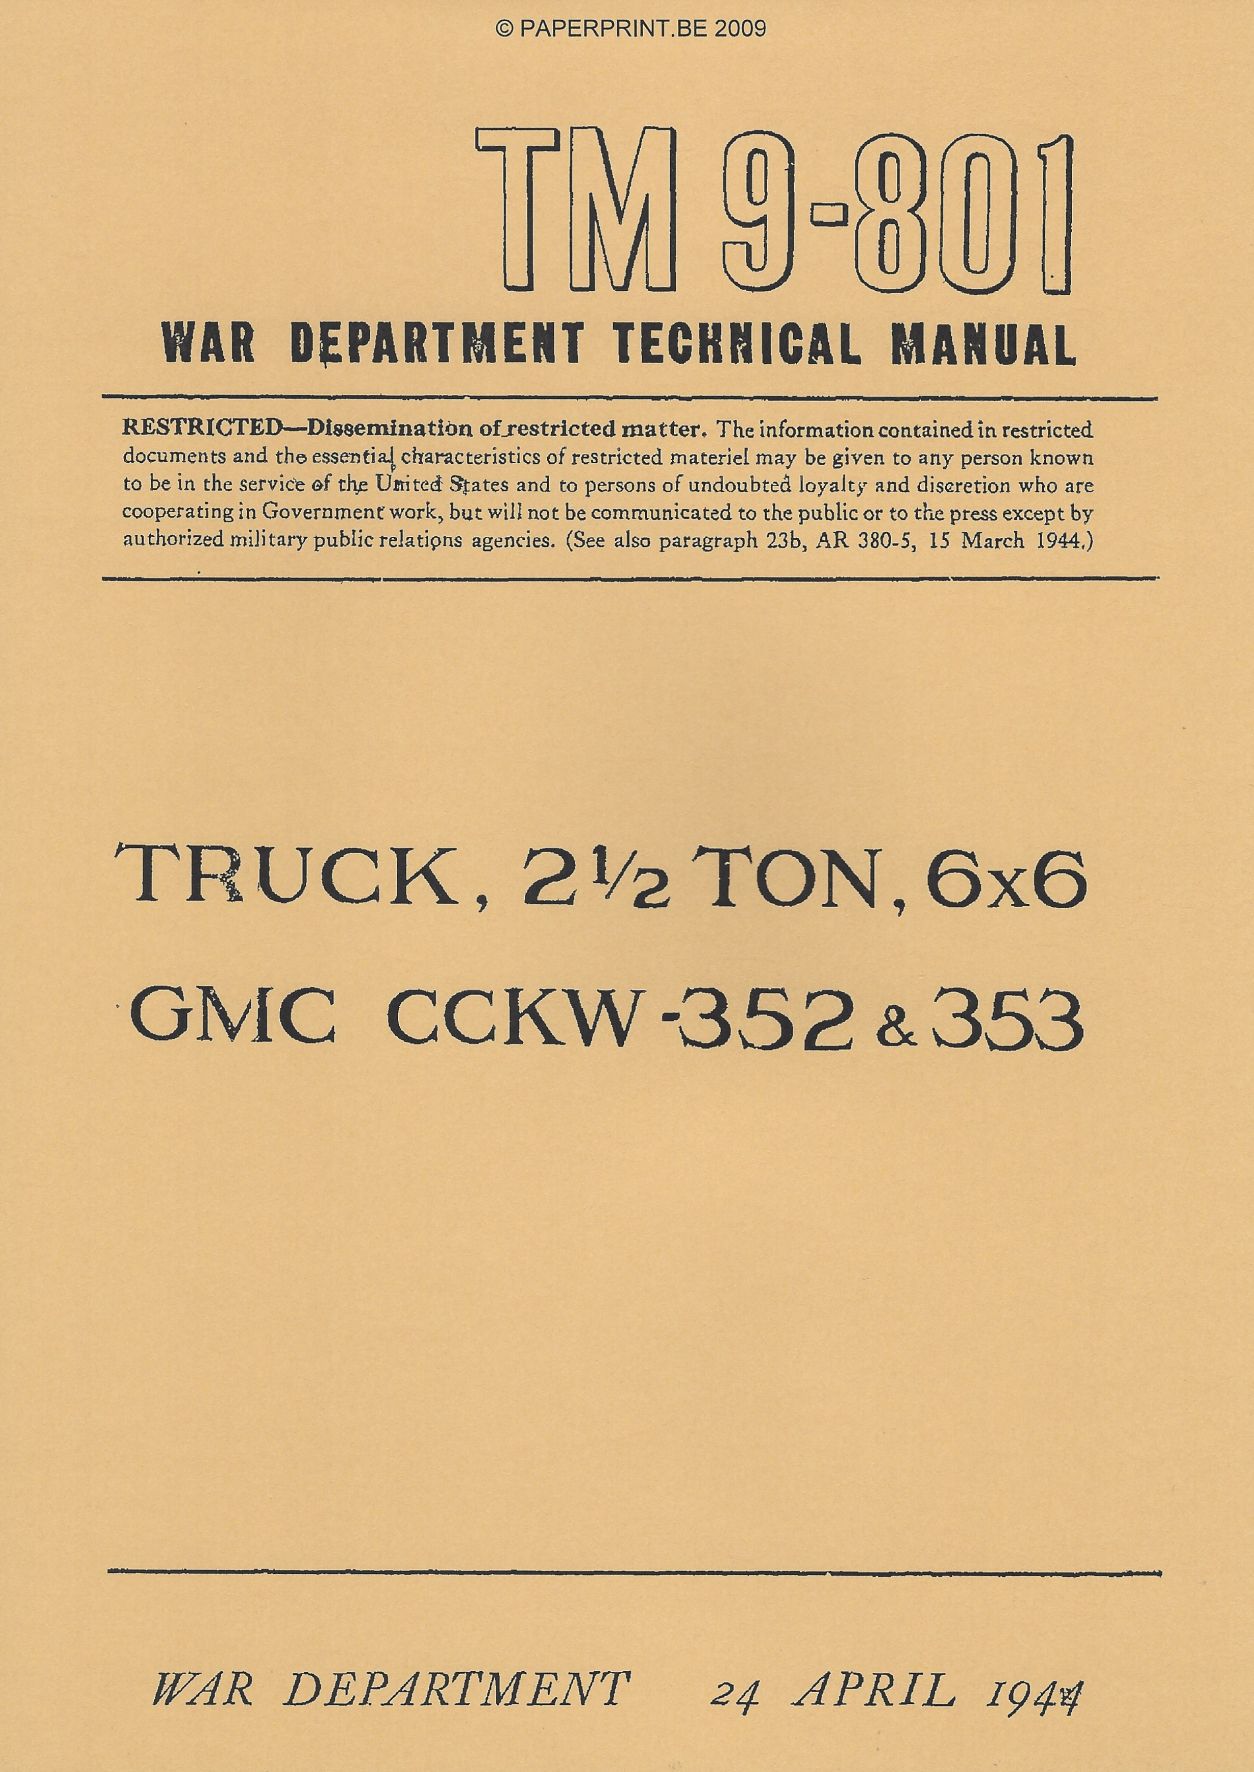 TM 9-801 US TRUCK, 2 ½ TON, 6x6 GMC CCKW-352 & 353